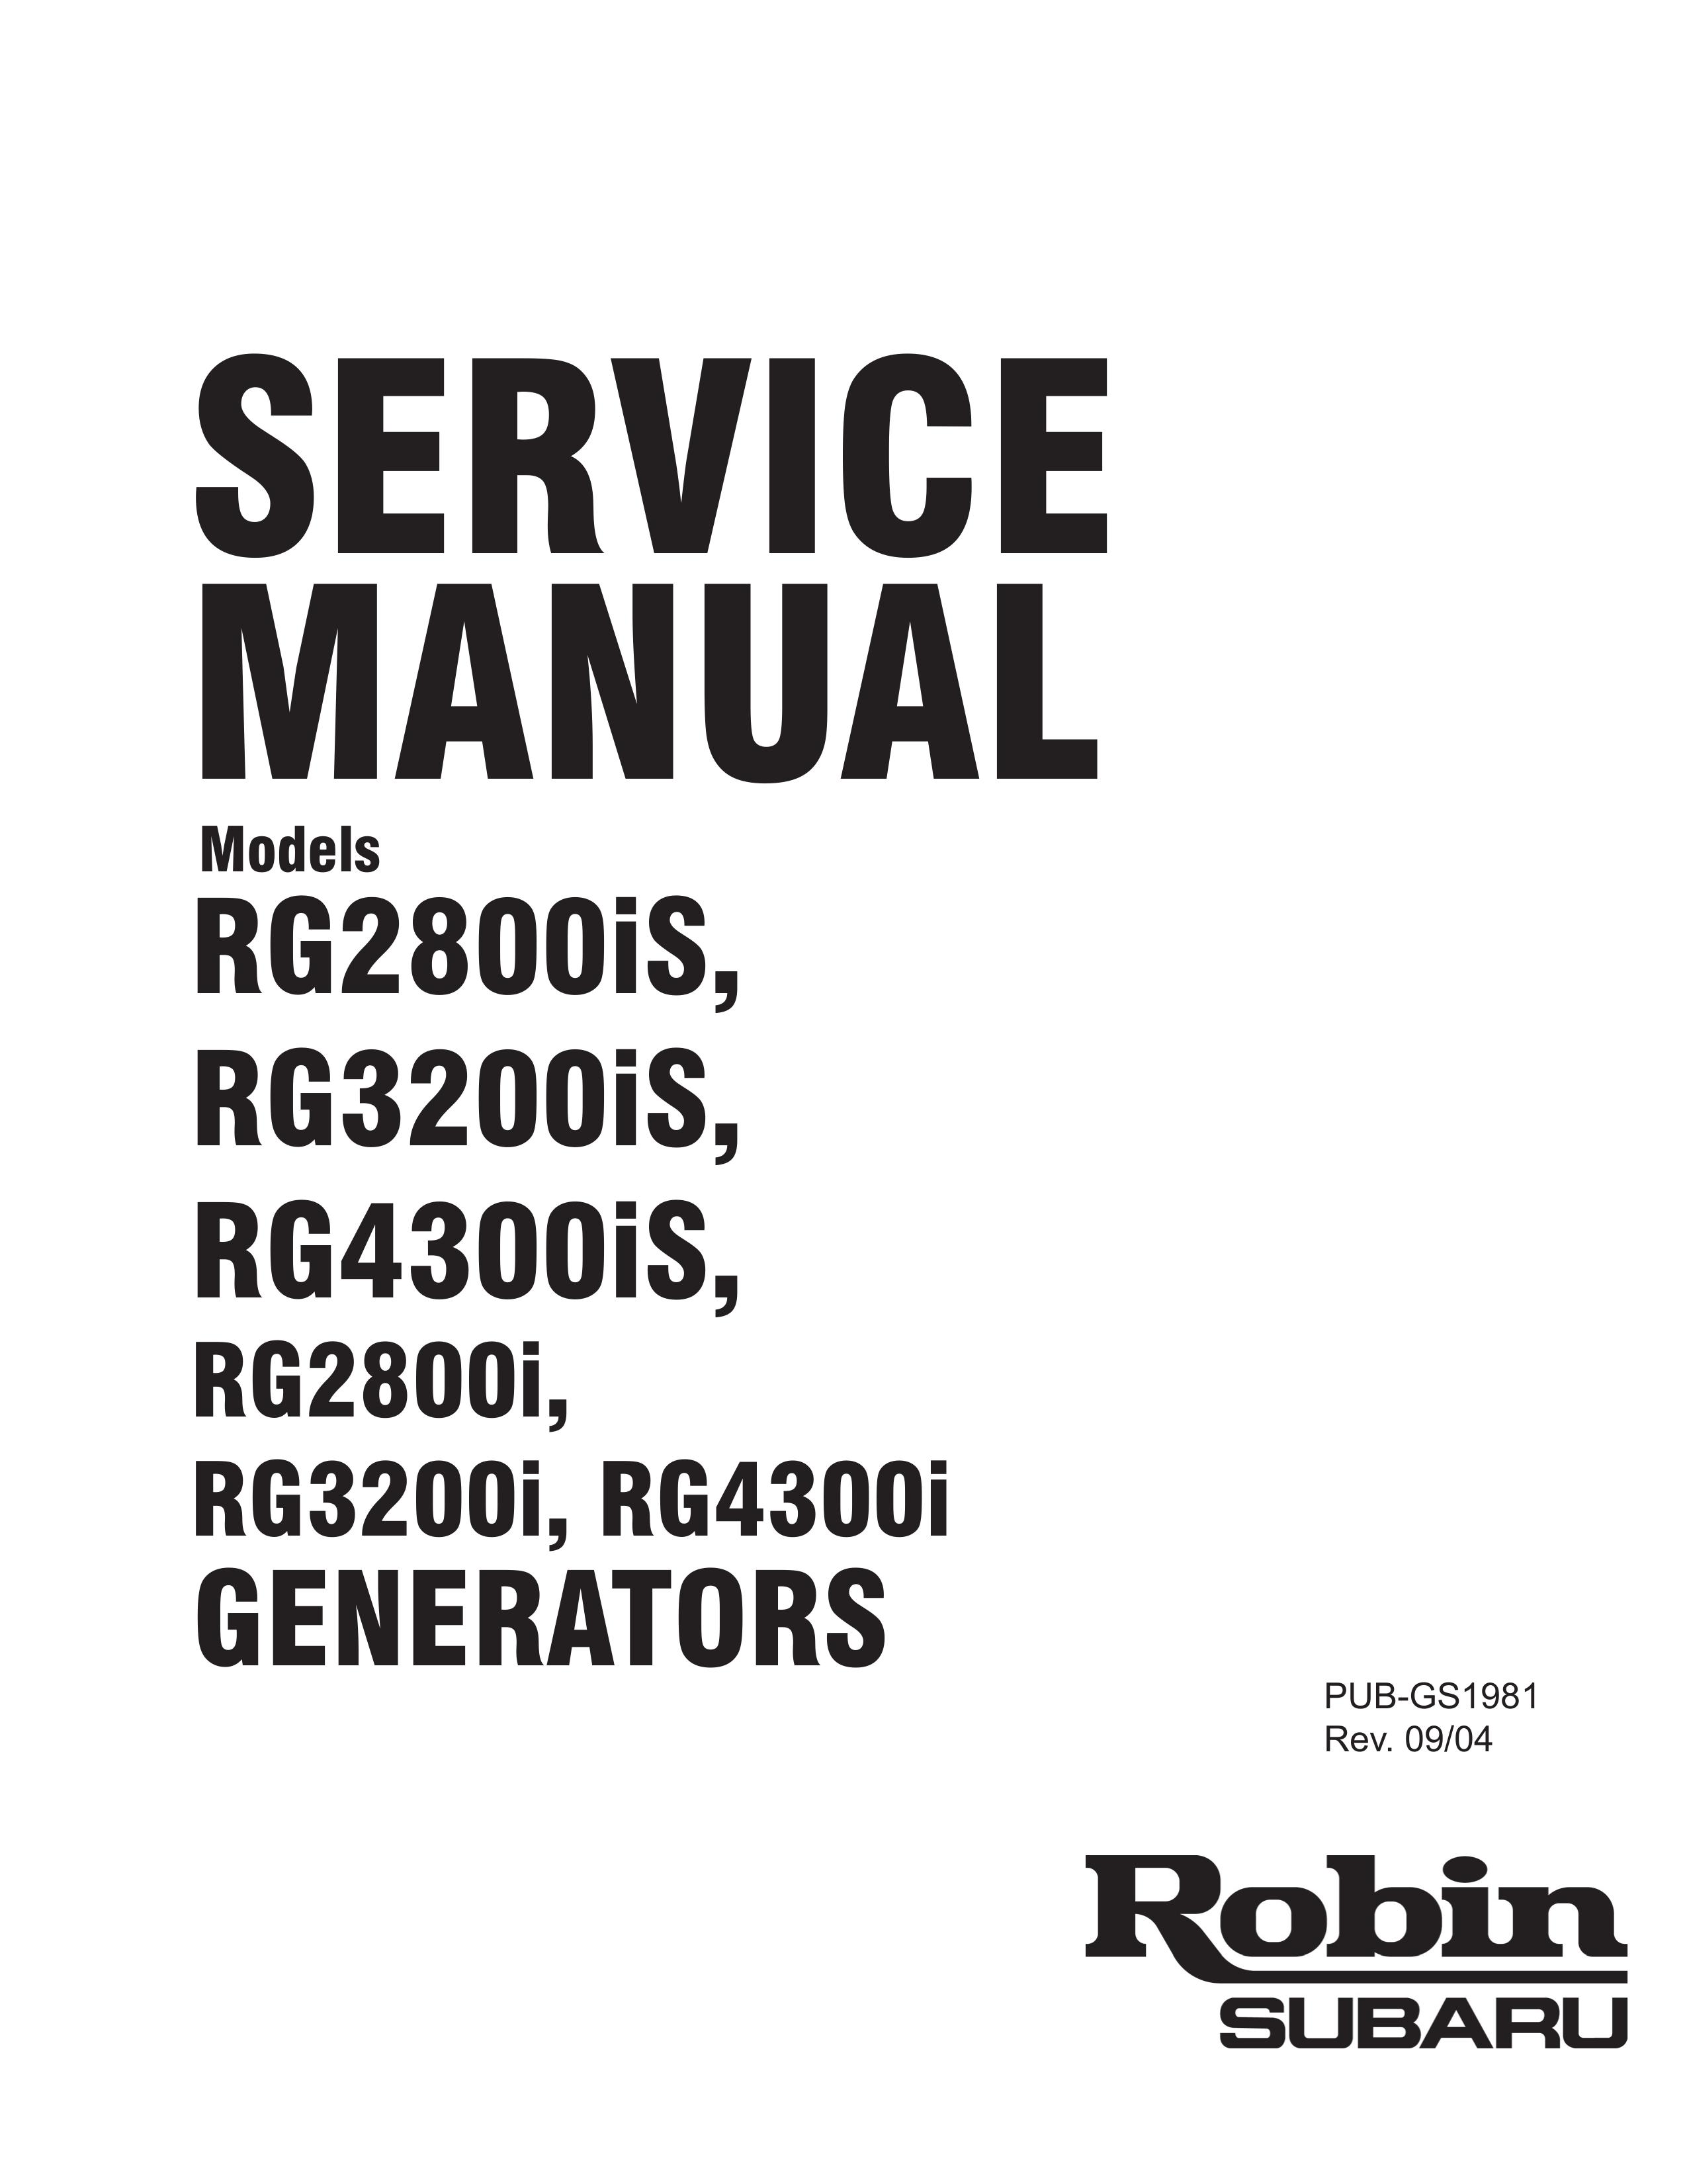 Subaru Robin Power Products RG3200I Portable Generator User Manual